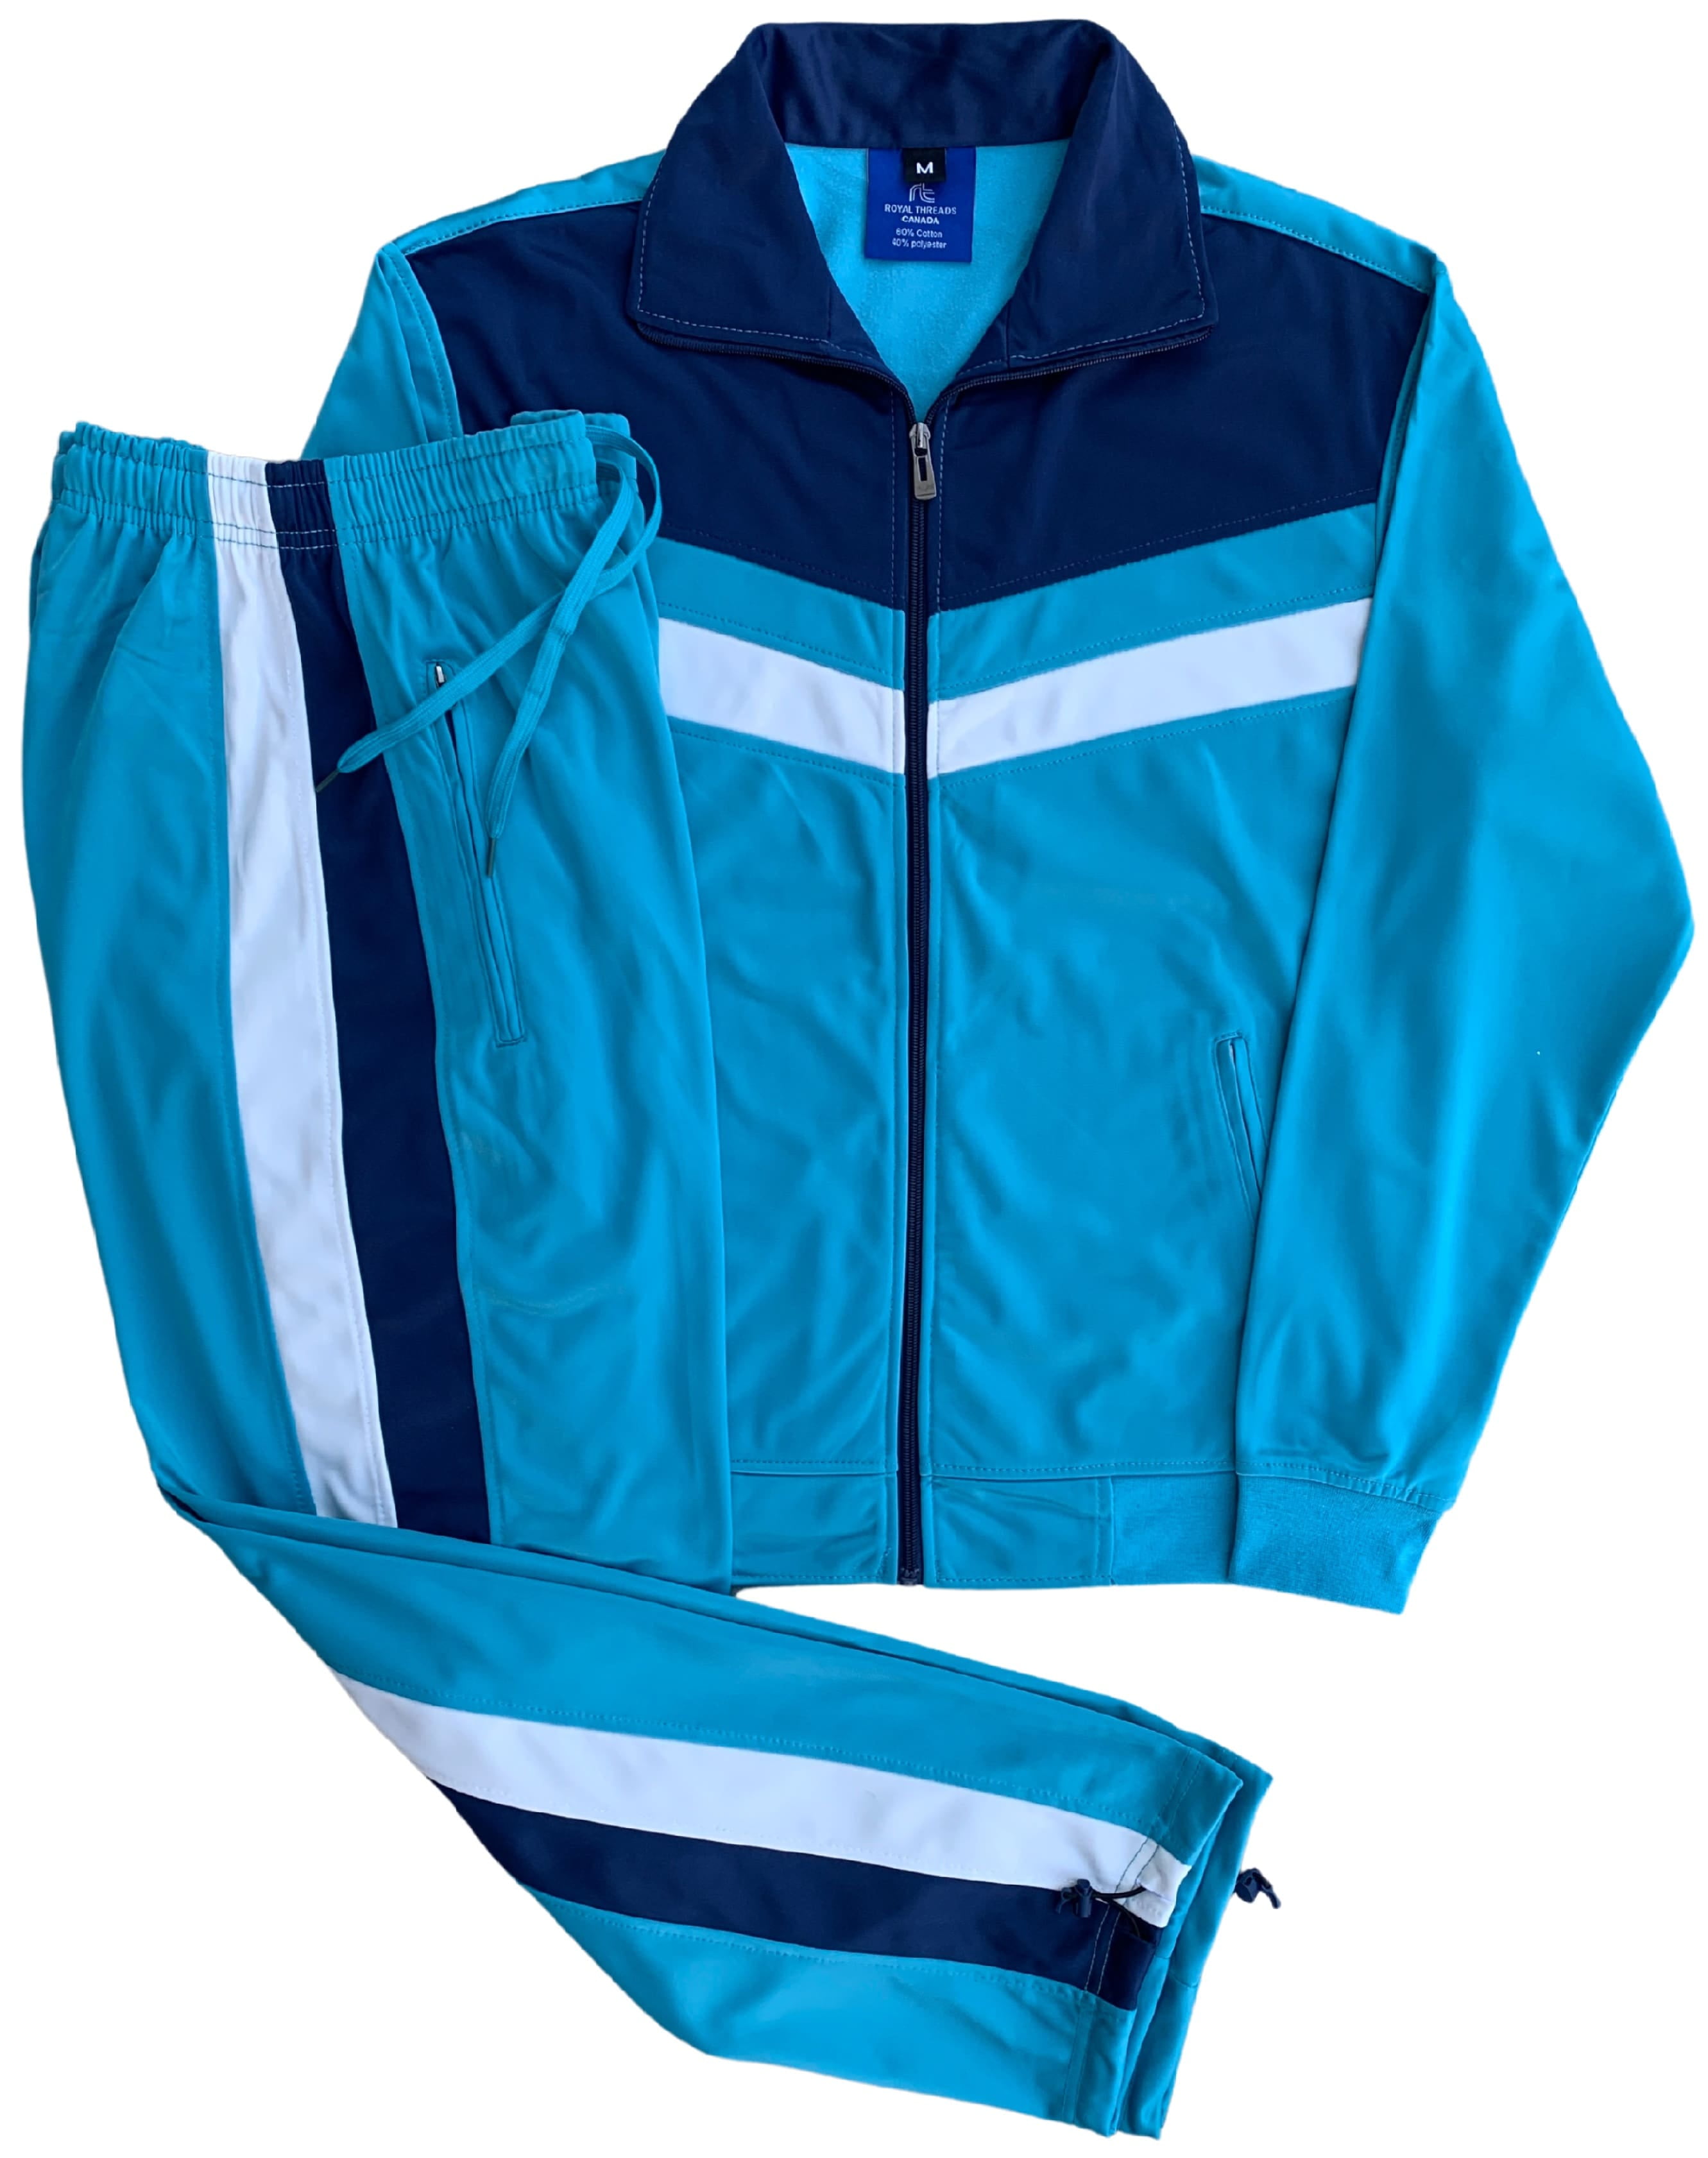 Men's RT Glad Tracksuit Active Track Jacket & Track Pants Outfit Suit ...